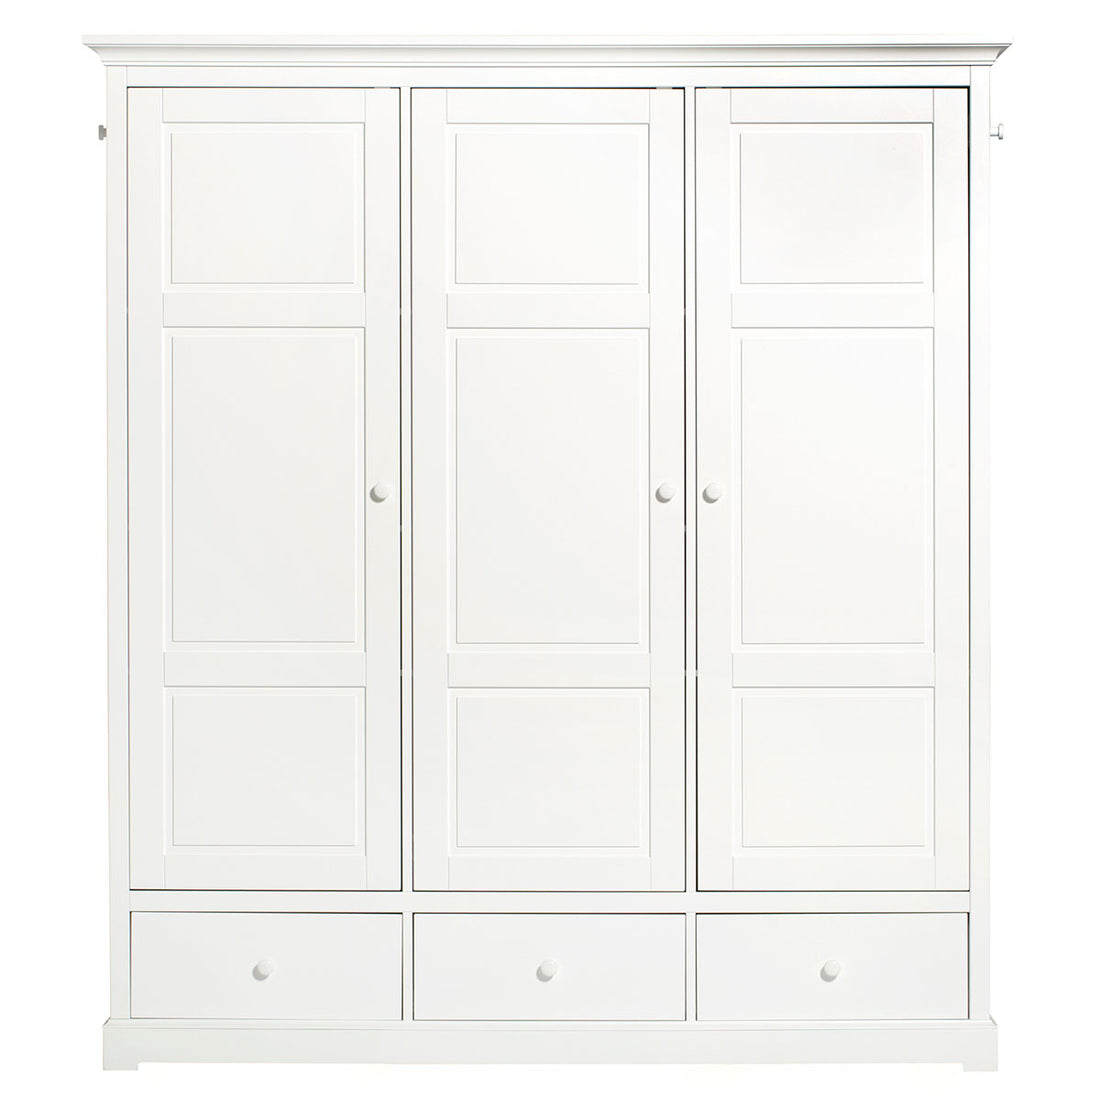 oliver-furniture-seaside-wardrobe-3-doors- (1)